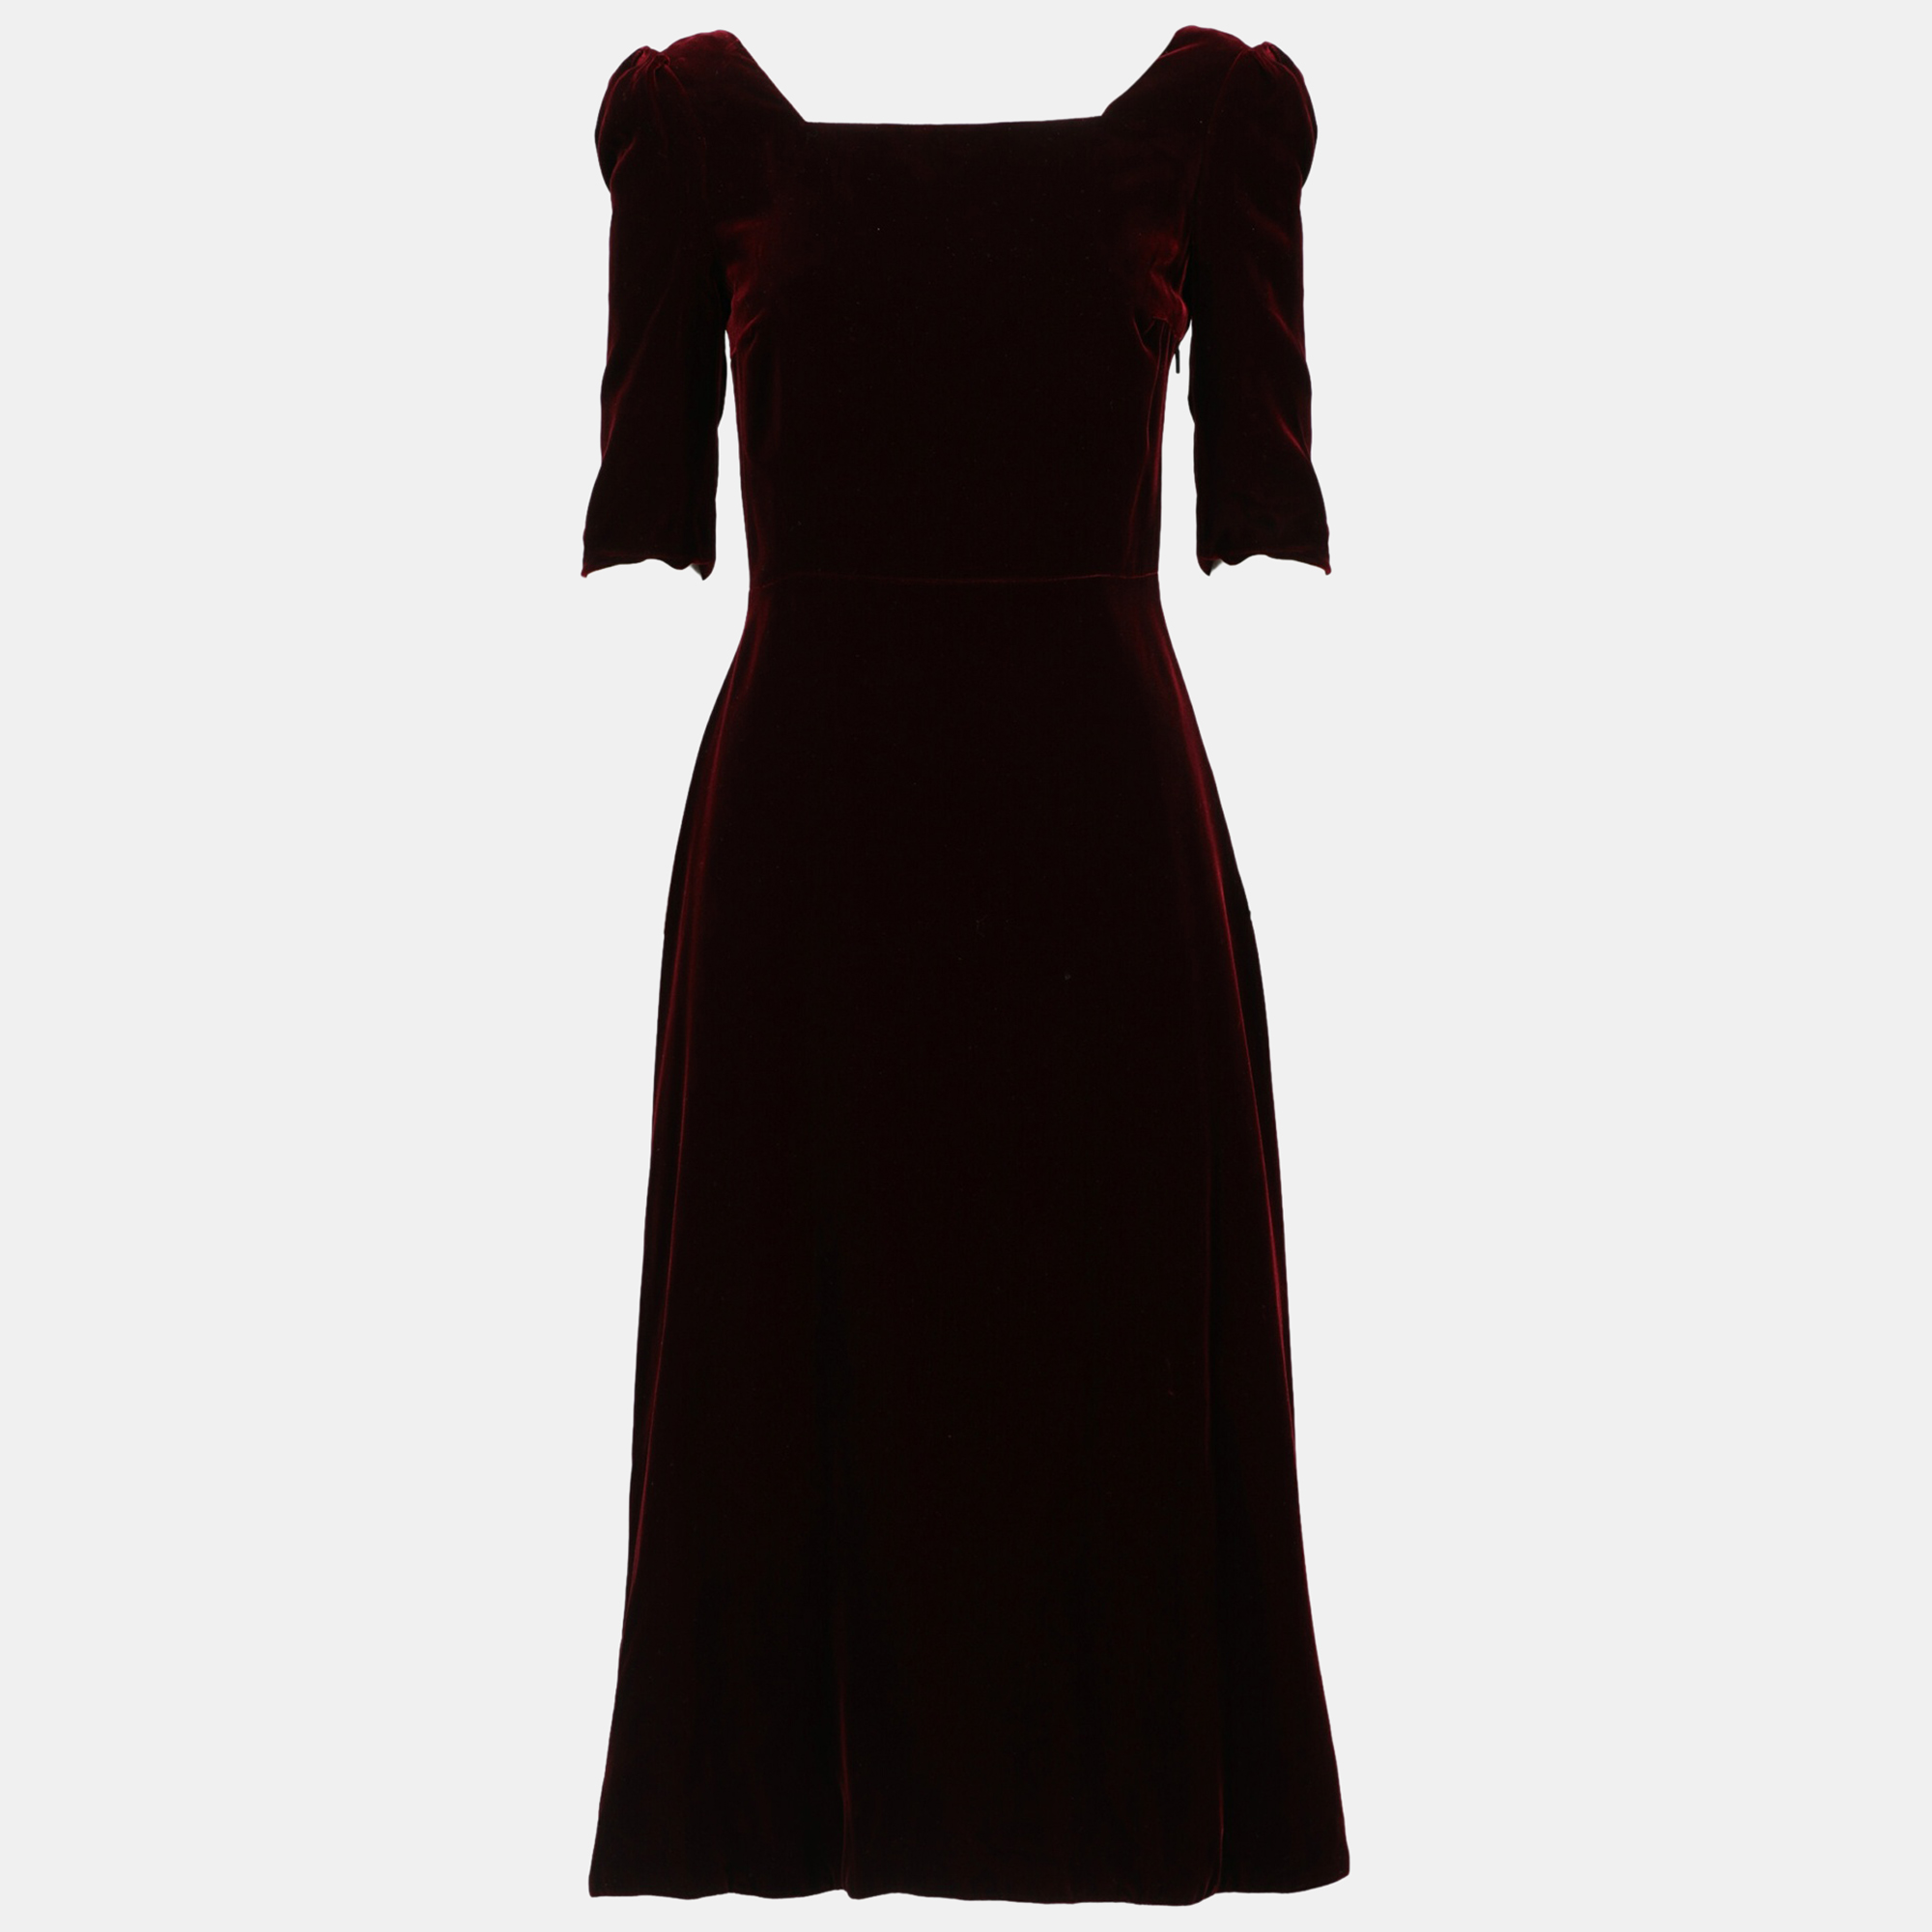 Saint Laurent  Women's Synthetic Fibers Longuette Dress - Burgundy - S